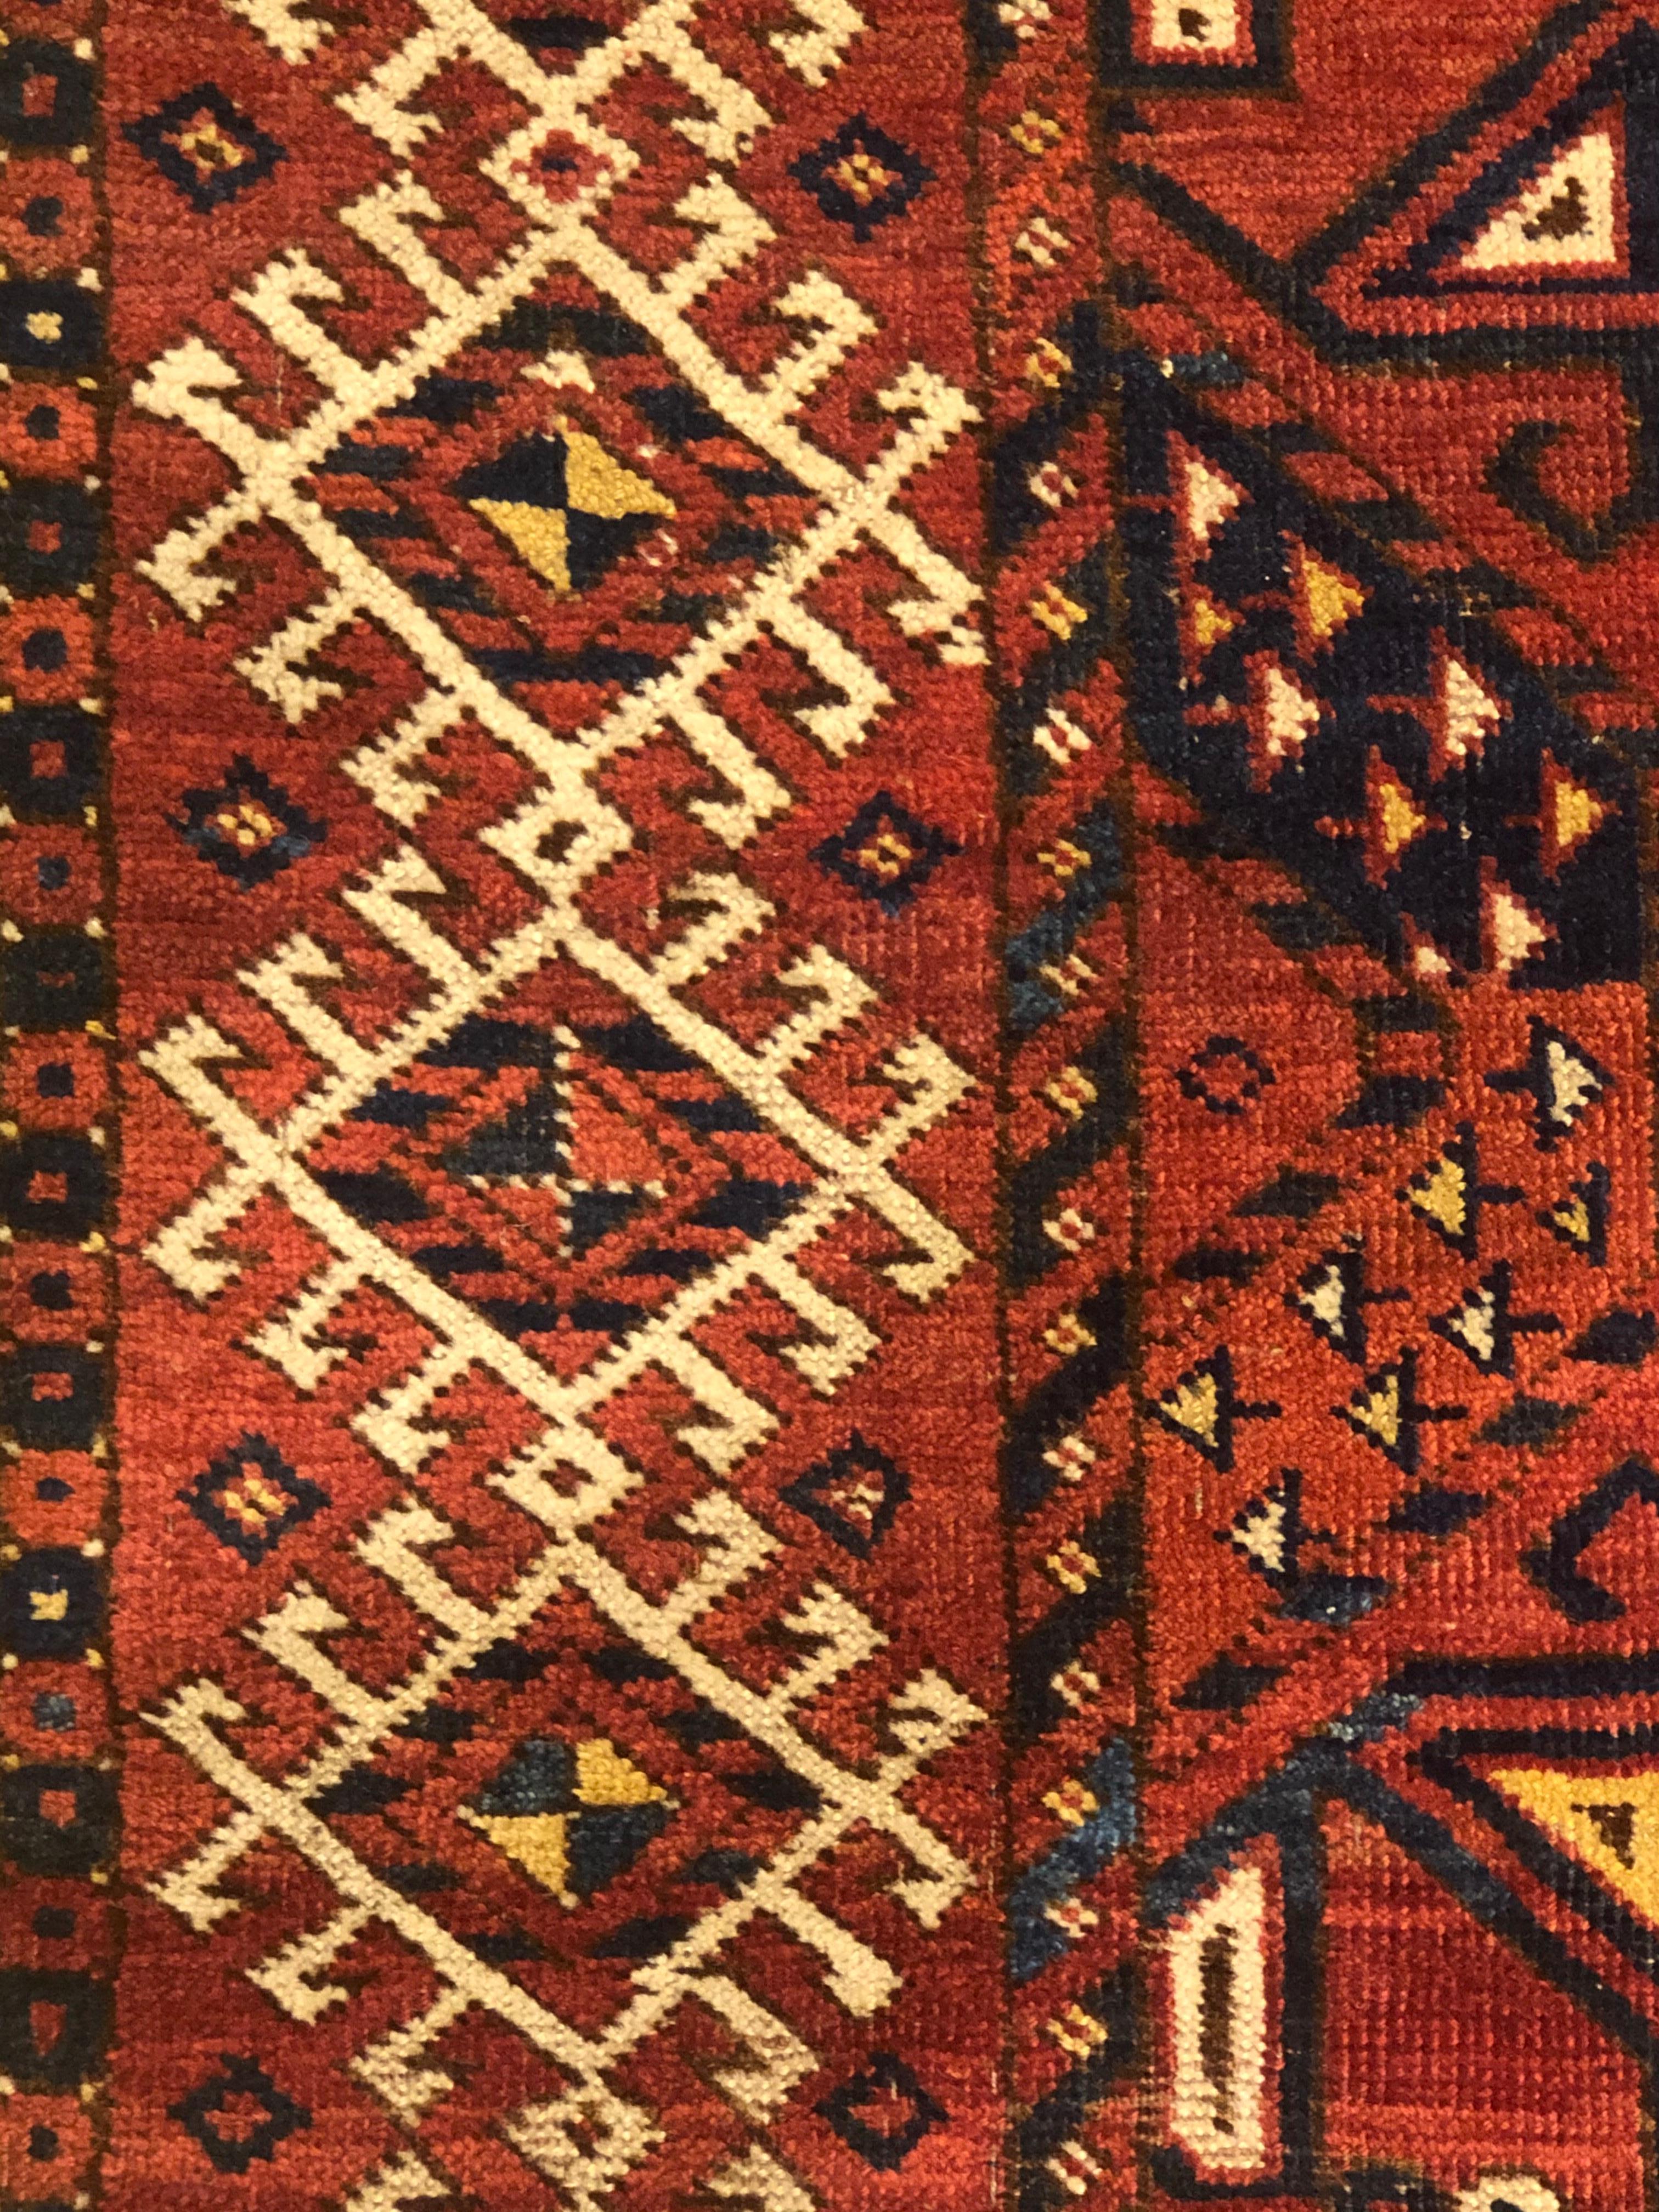 19th Century Antique Red Geometric Turkmen Erzari Rug € 9, 000, ca 1870 For Sale 2